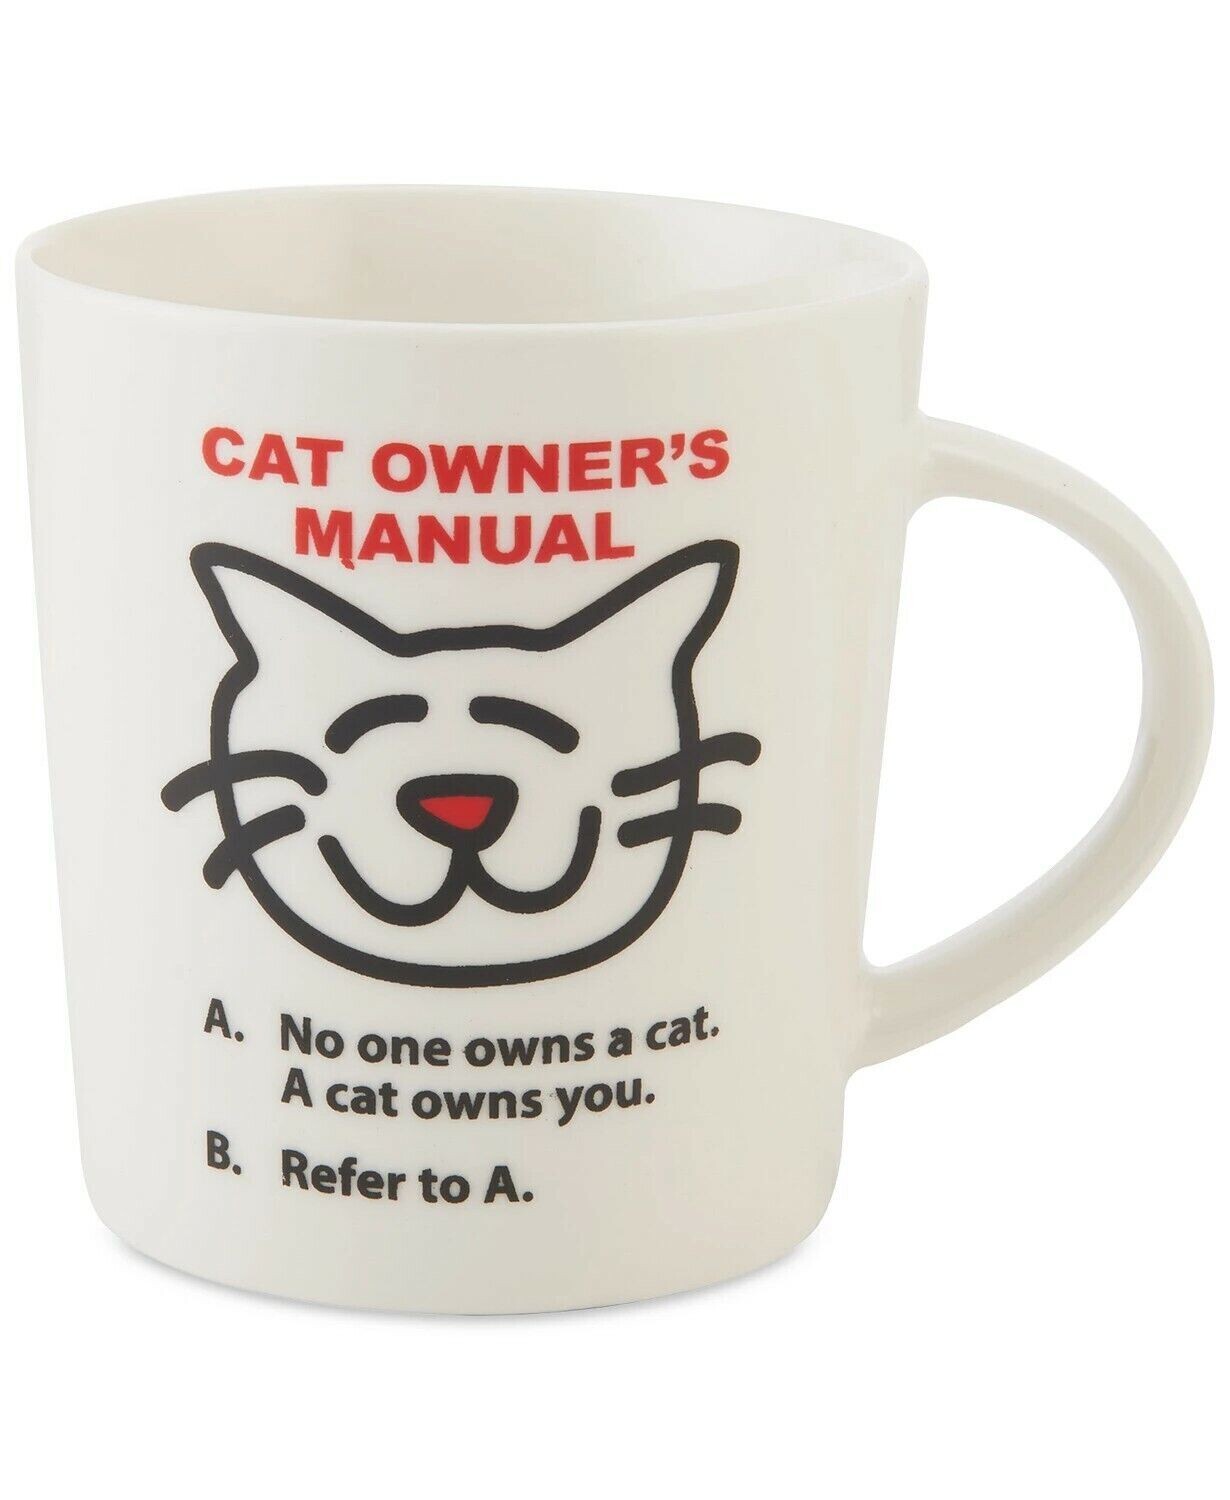 Pfaltzgraff Cat Owner's Manual Mug